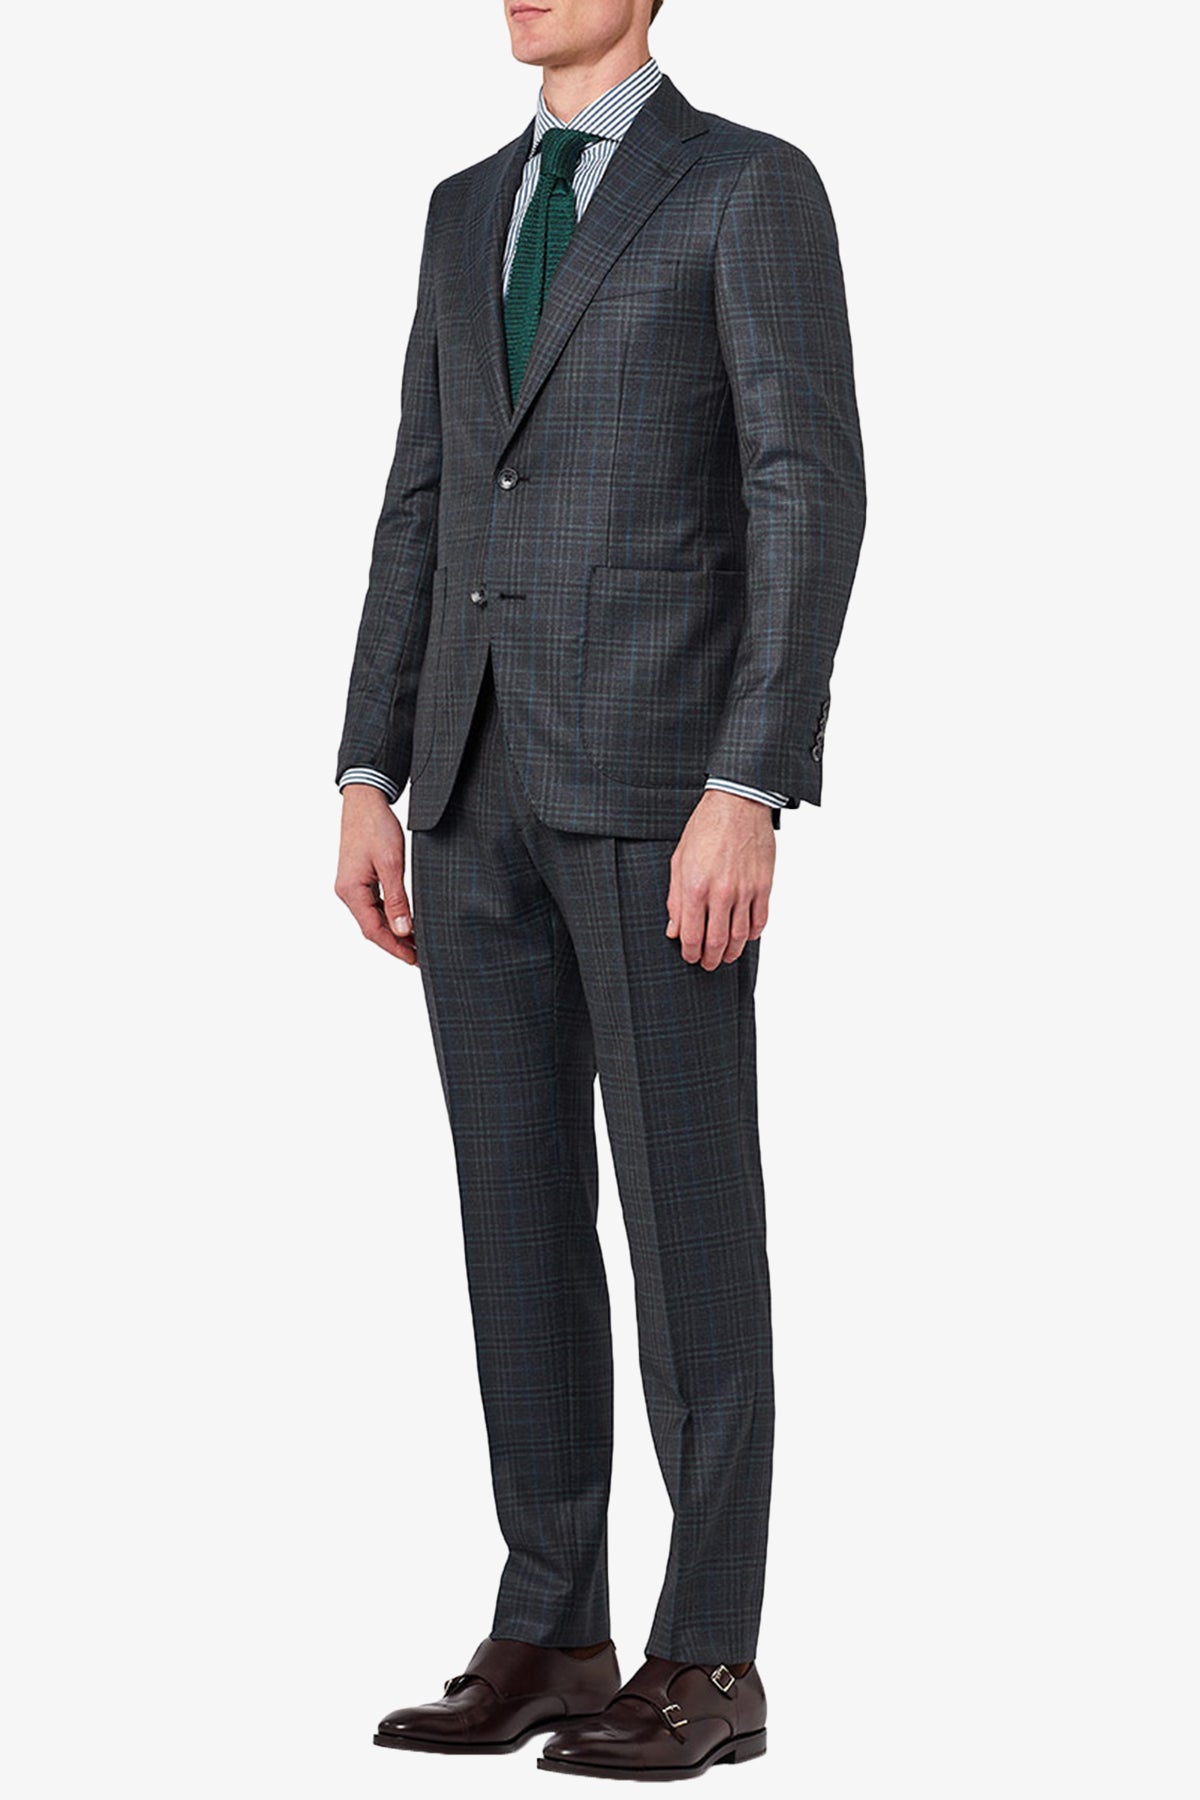 Henderson -  Charcoal Suit